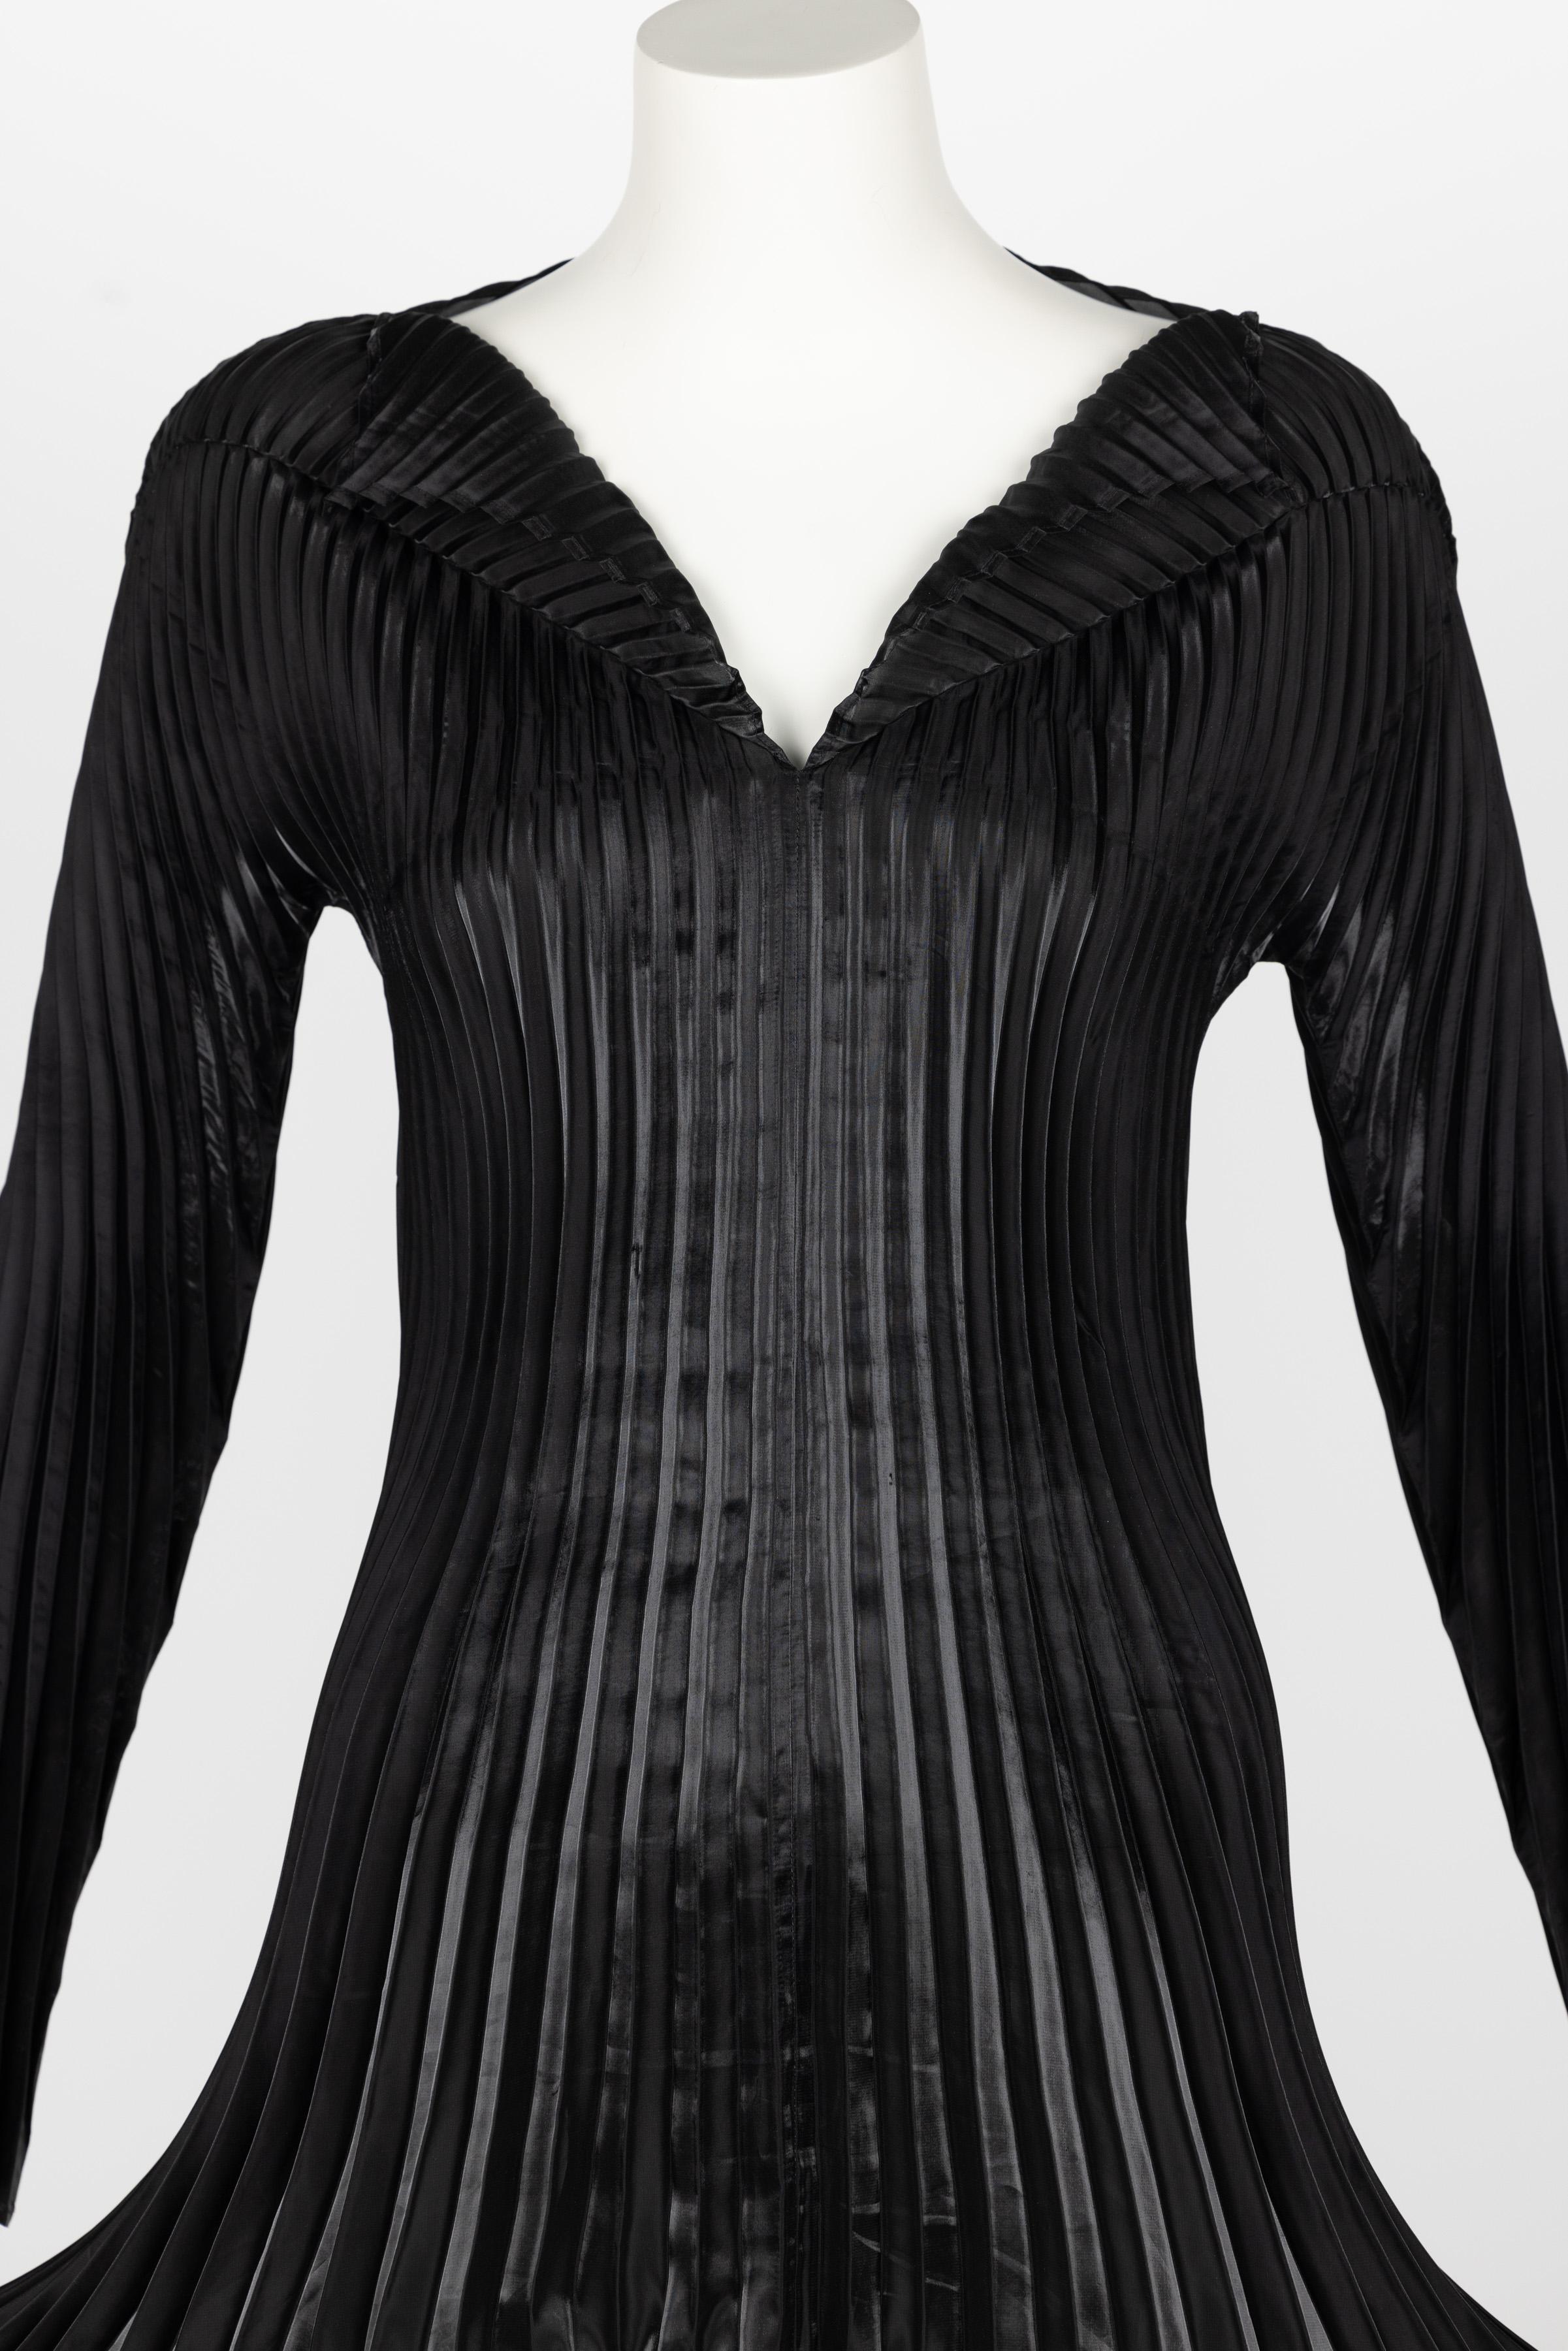 Collectors Issey Miyake Fall 1999 Documented Metallic Black Dress 3